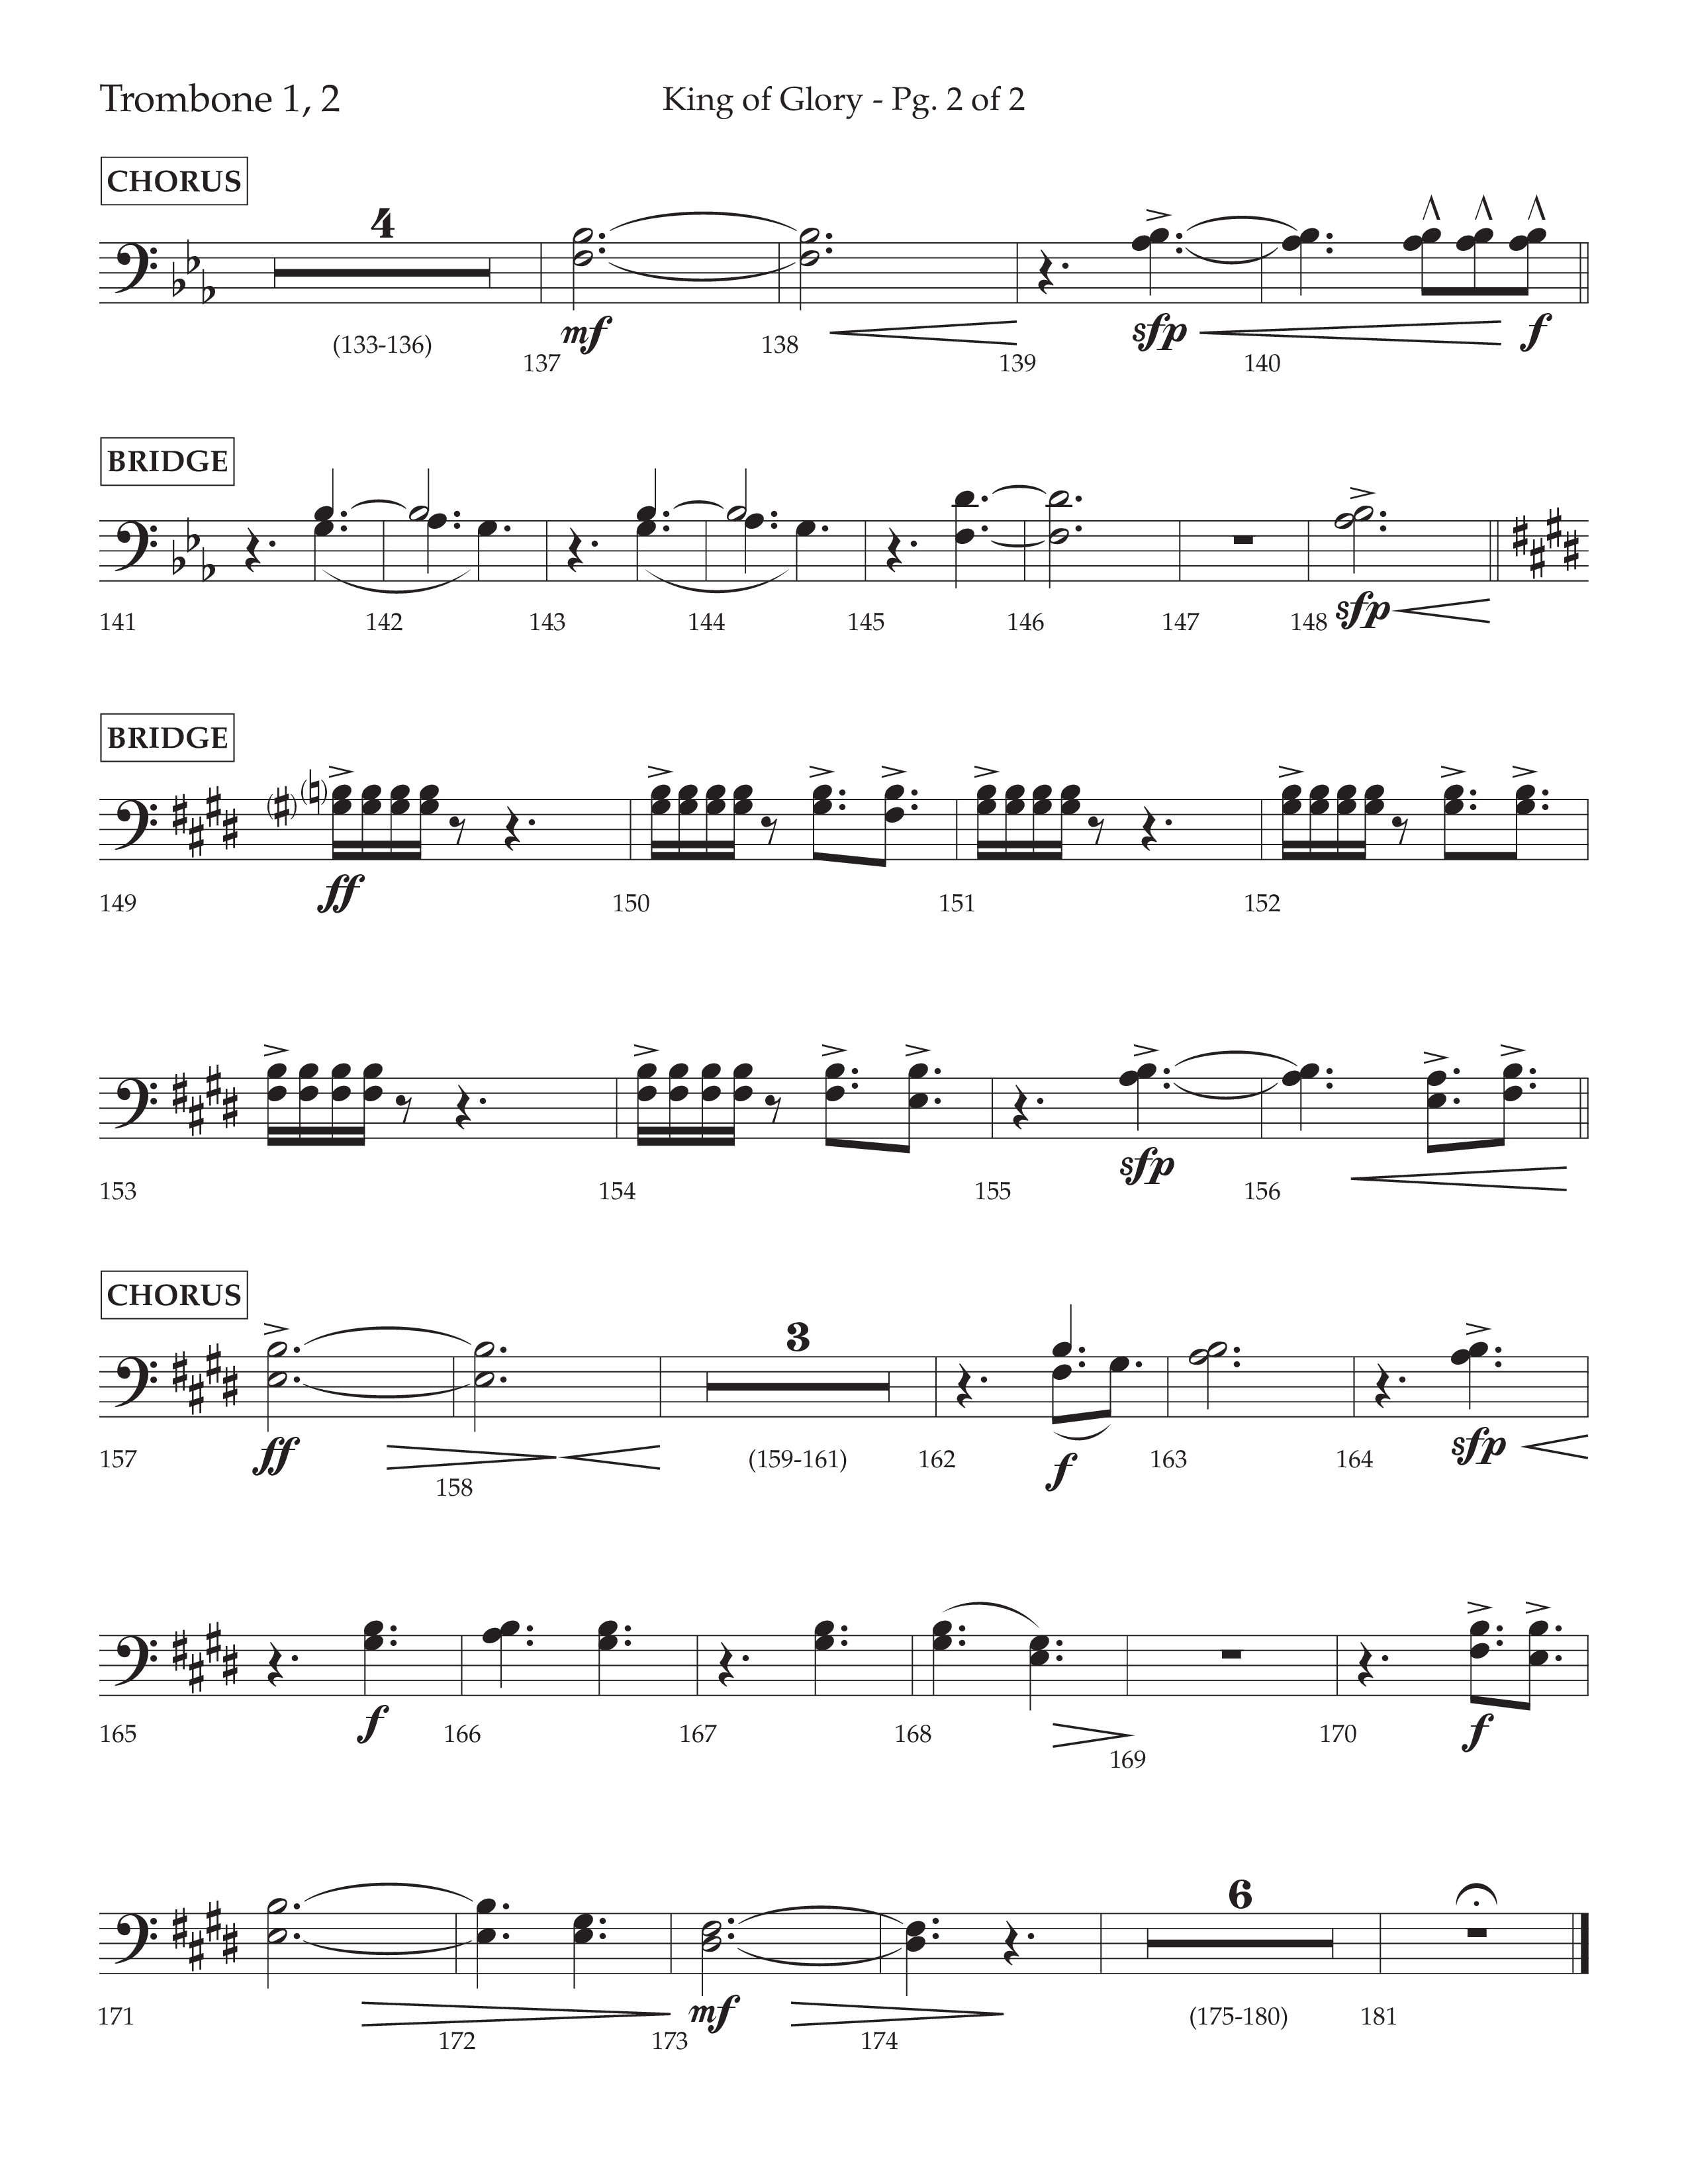 King Of Glory (Choral Anthem SATB) Trombone 1/2 (Lifeway Choral / Arr. David Wise / Orch. David Shipps)